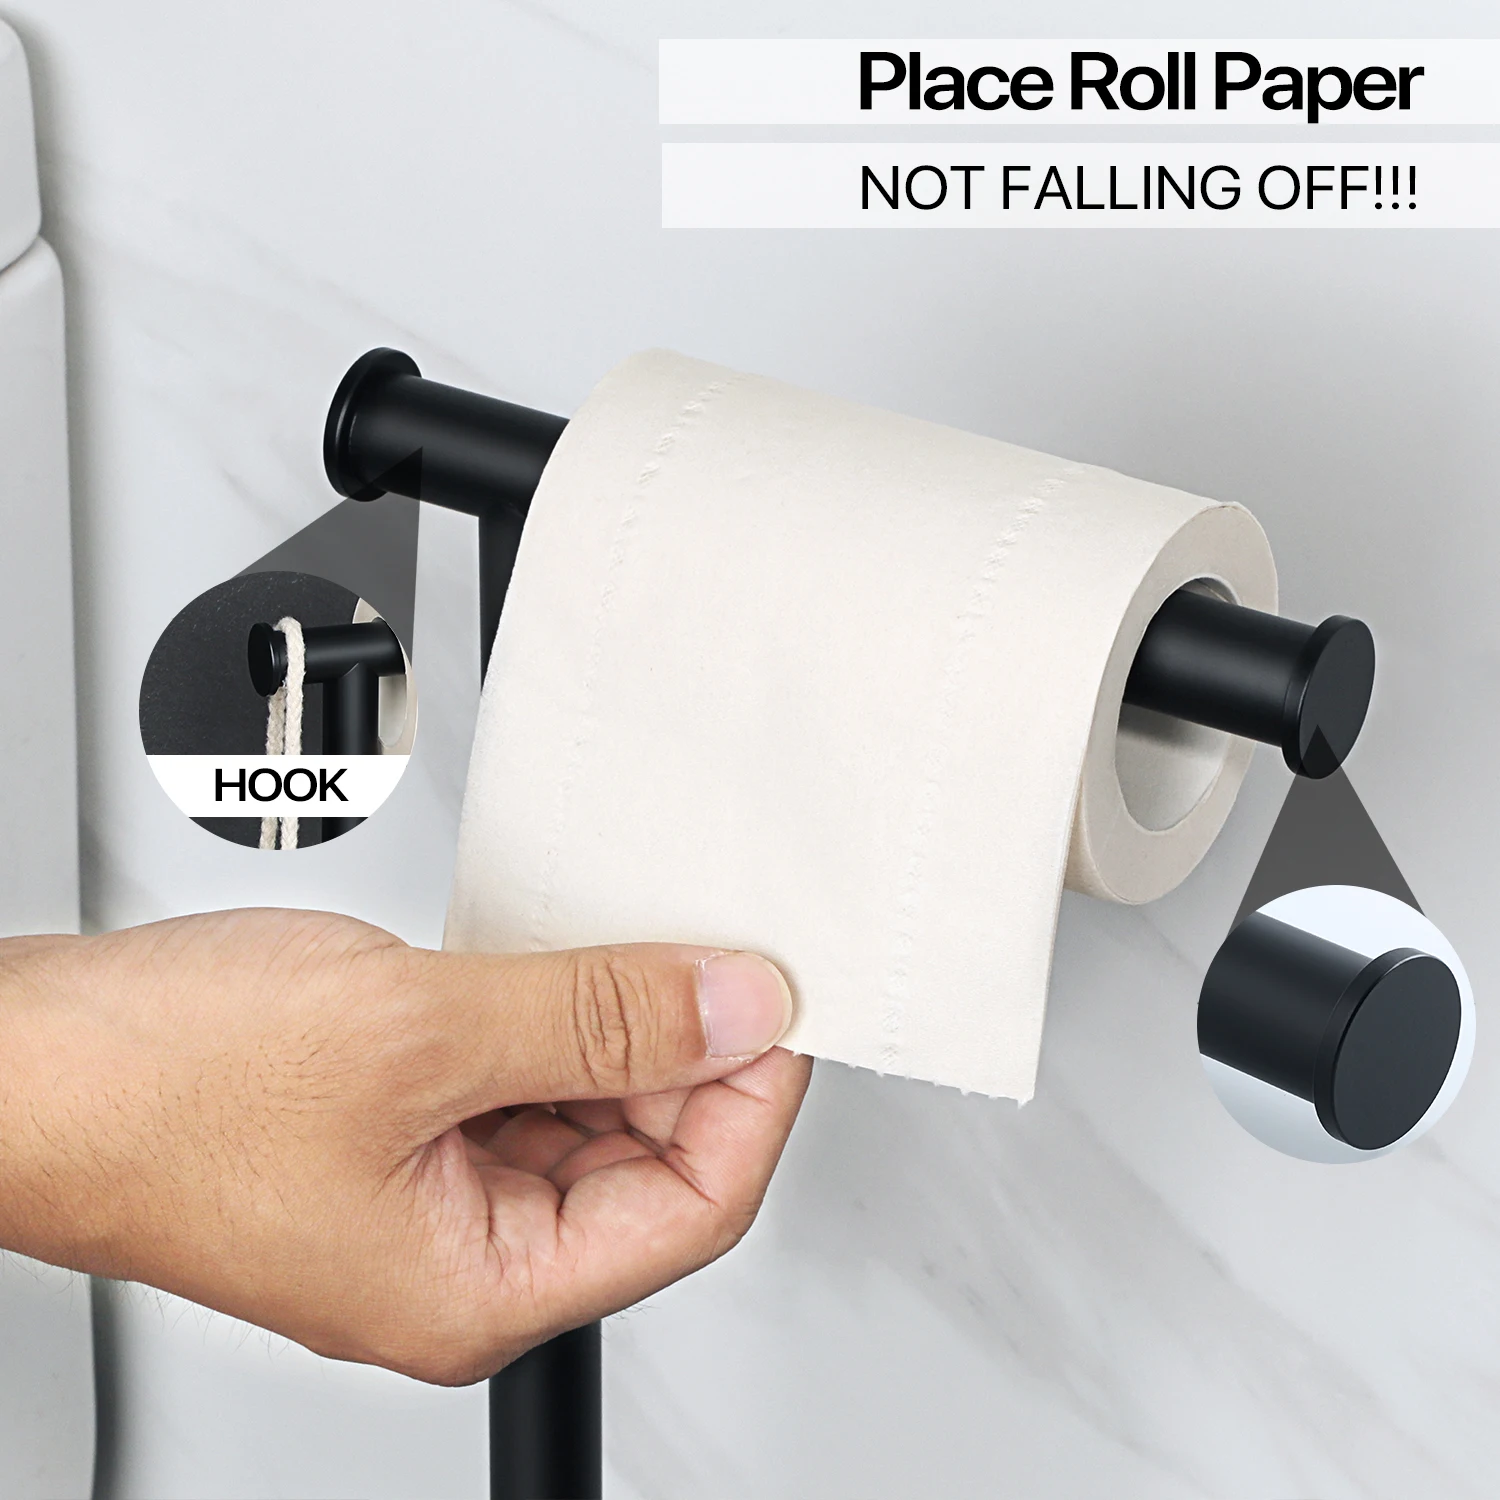 Floor Standing Toilet Paper Holder 304 Stainless Steel Black Roll Paper  Dispenser With Paper Storage for Bathroom Organization